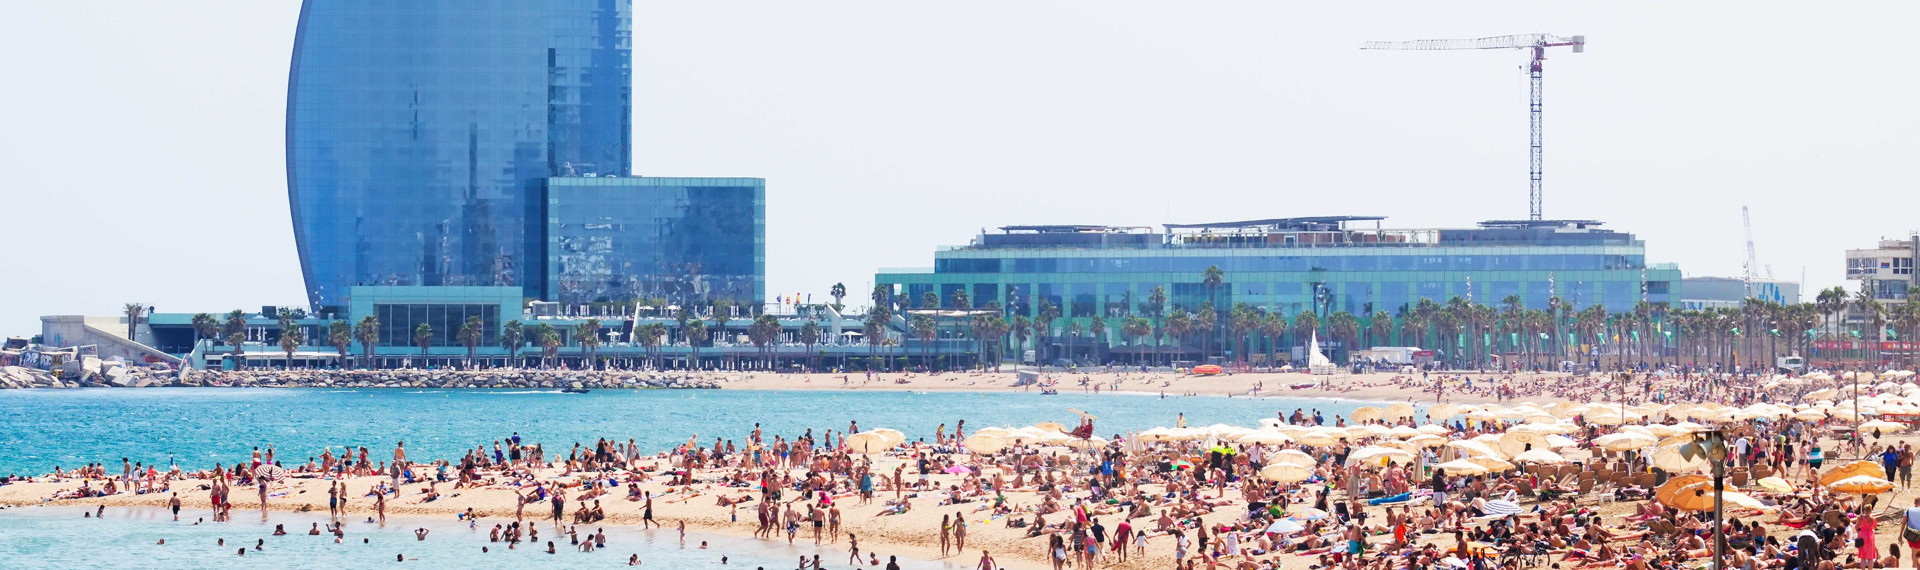 Barcelona beach STOCK